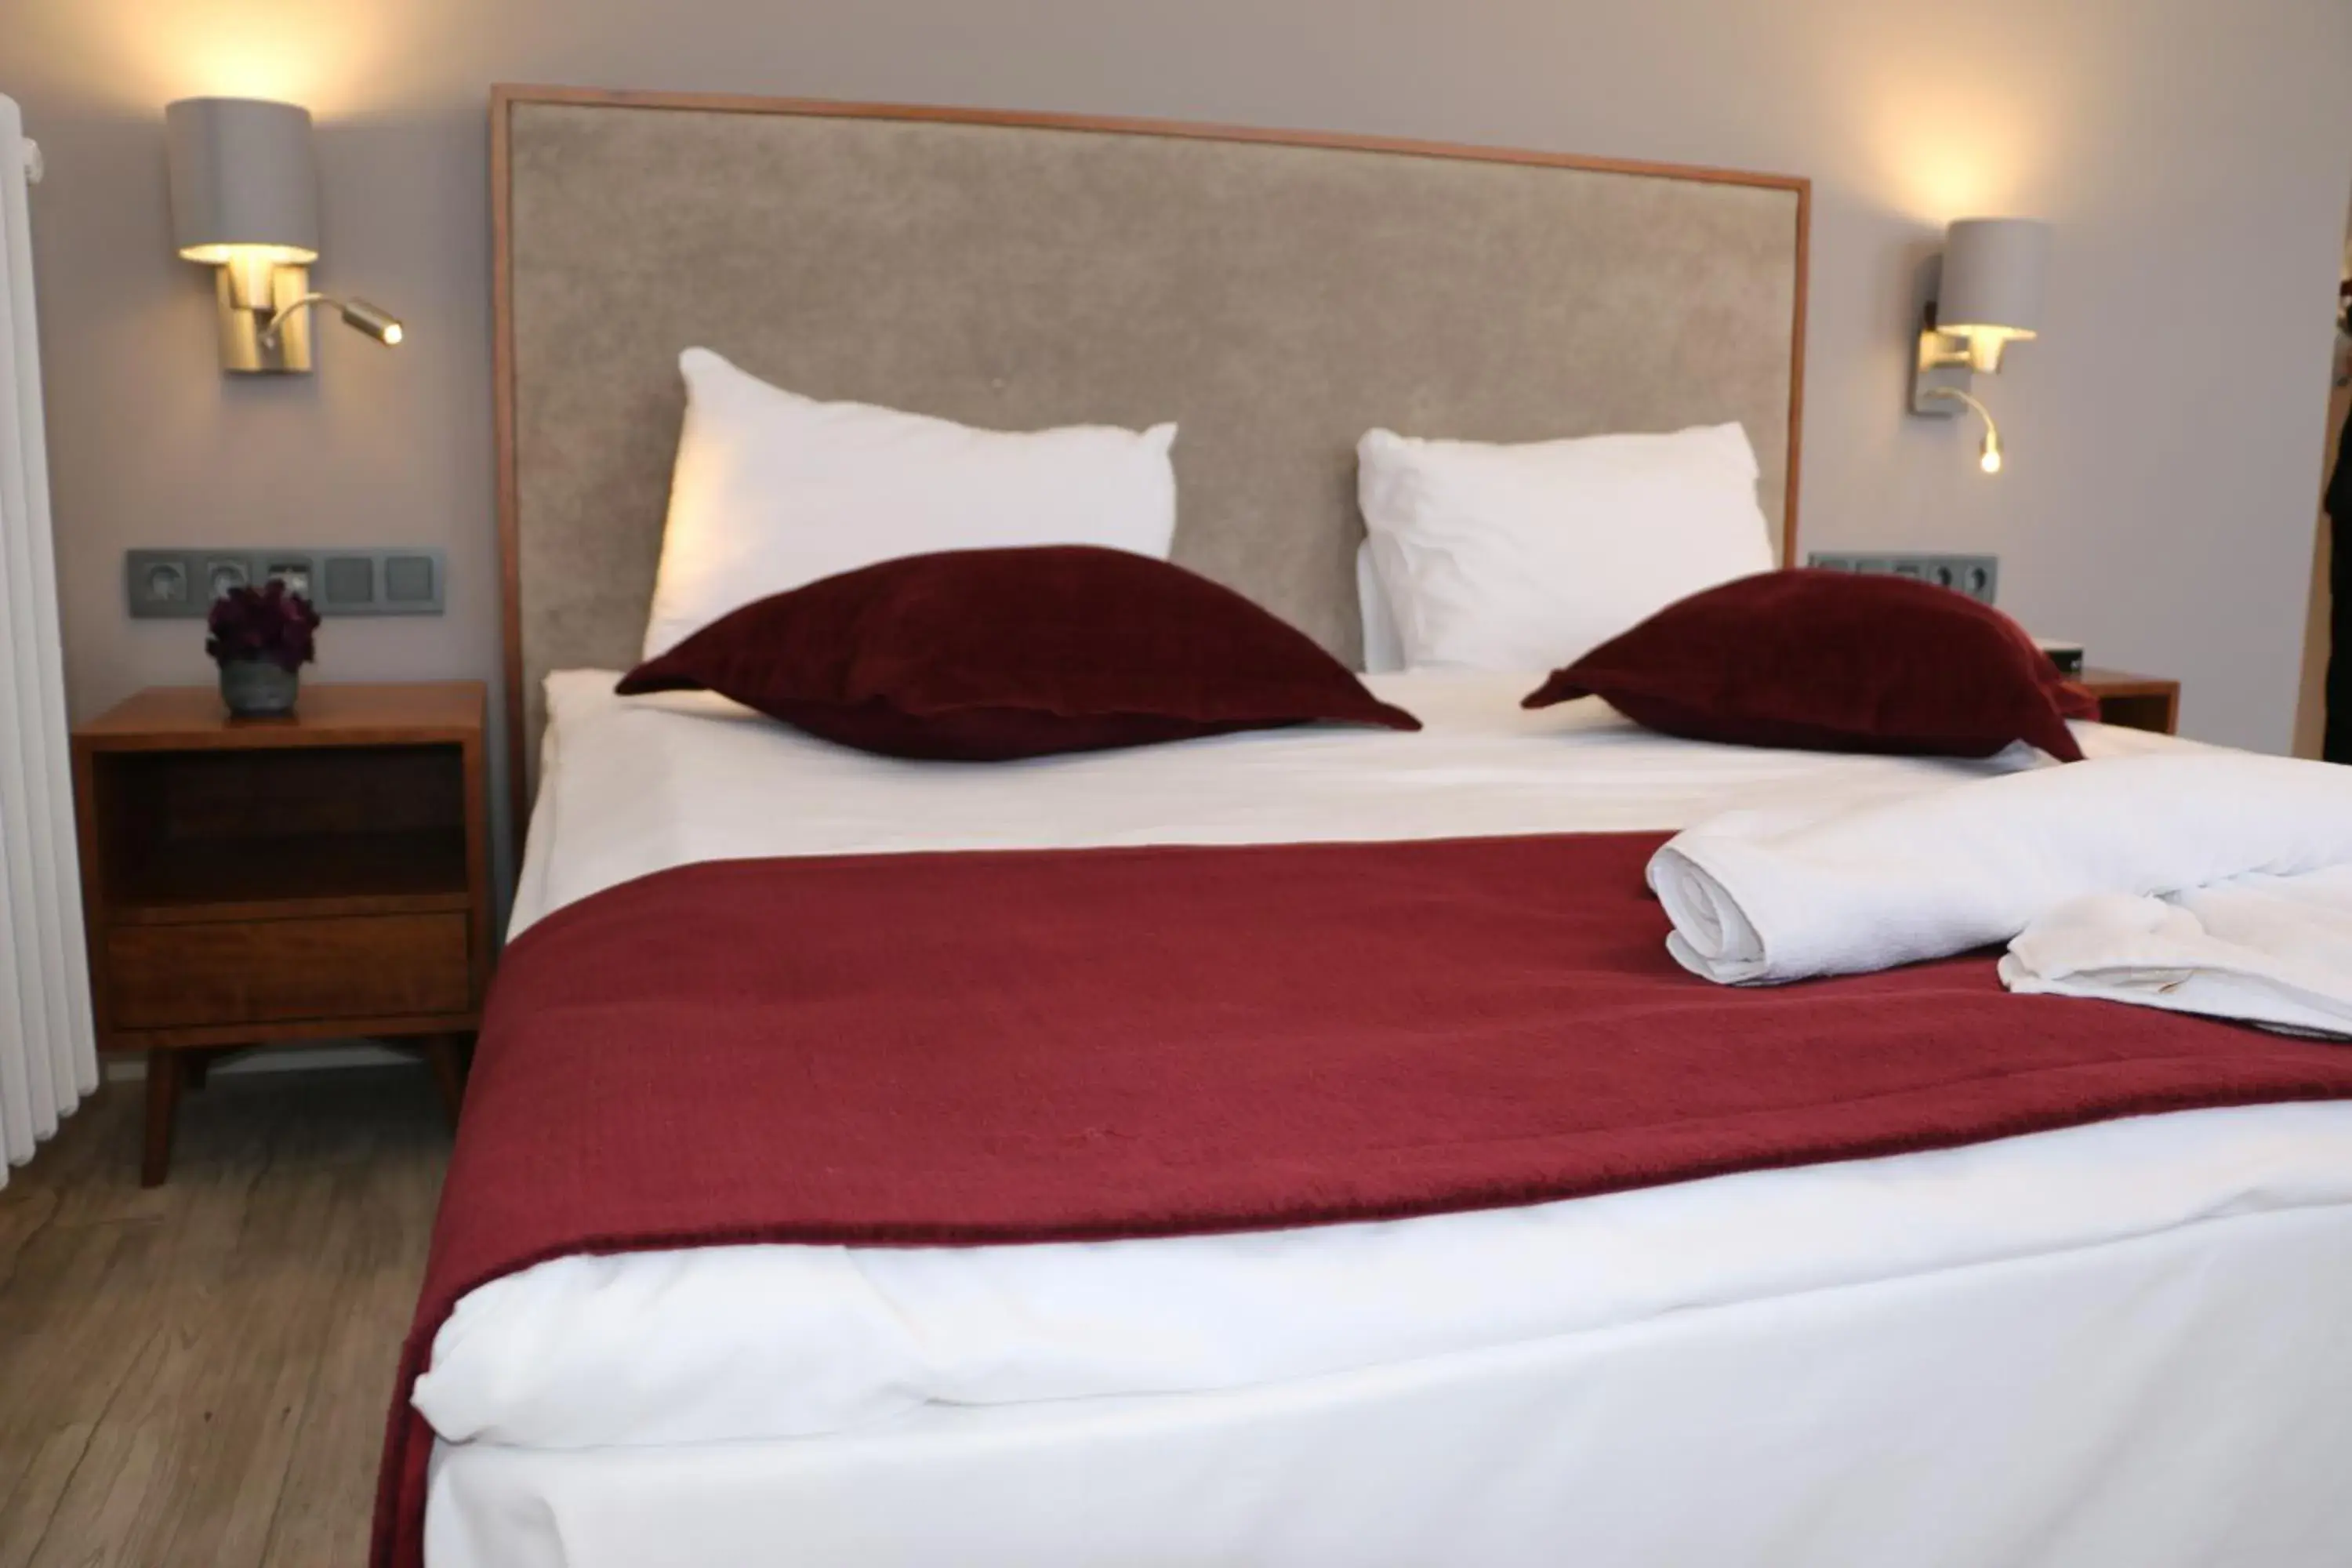 Bed, Room Photo in Triada Hotel Taksim